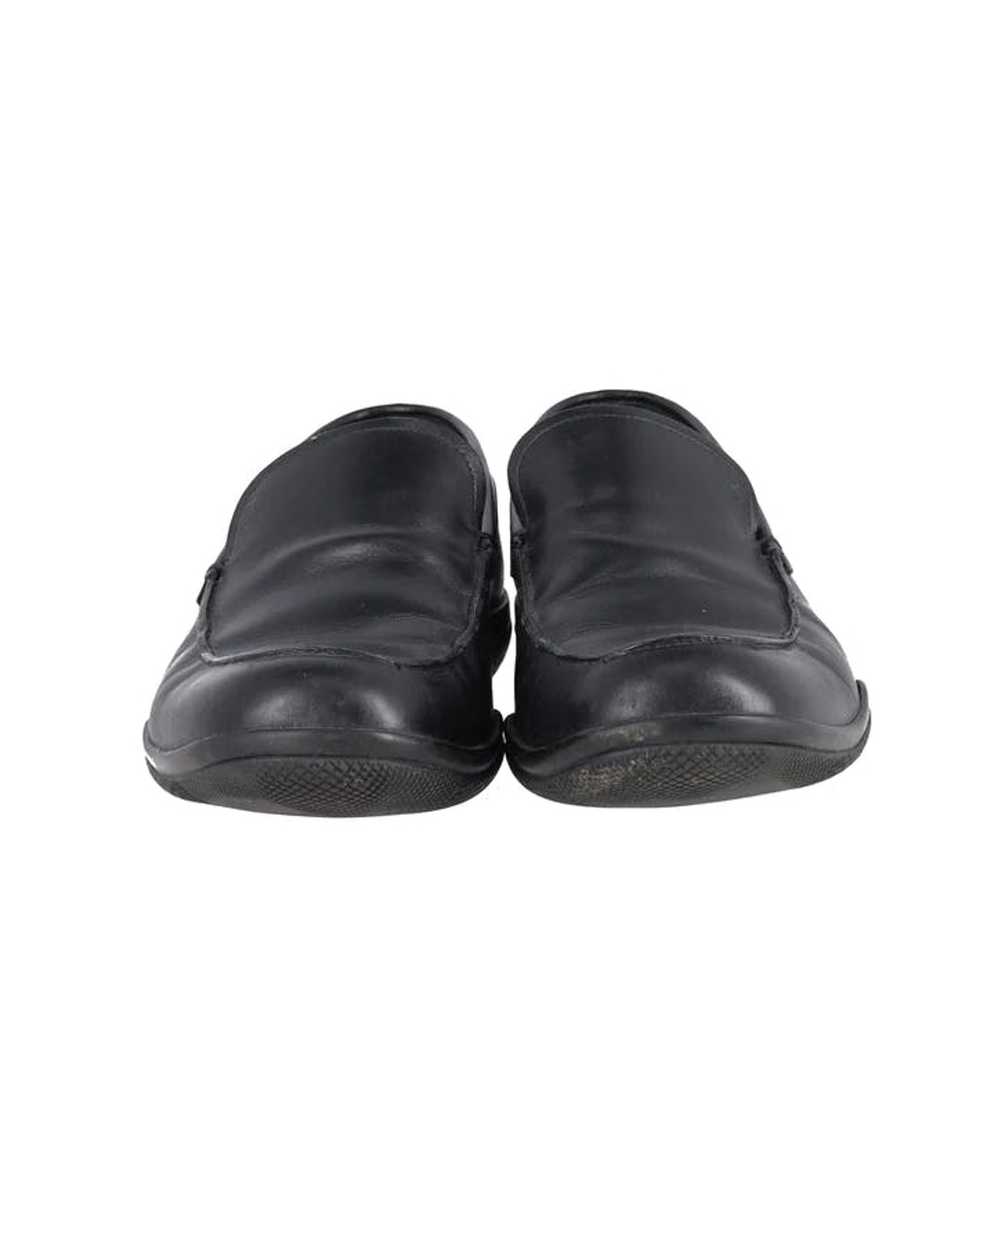 Prada o1b1f11ly0723 Loafers in Black - image 2